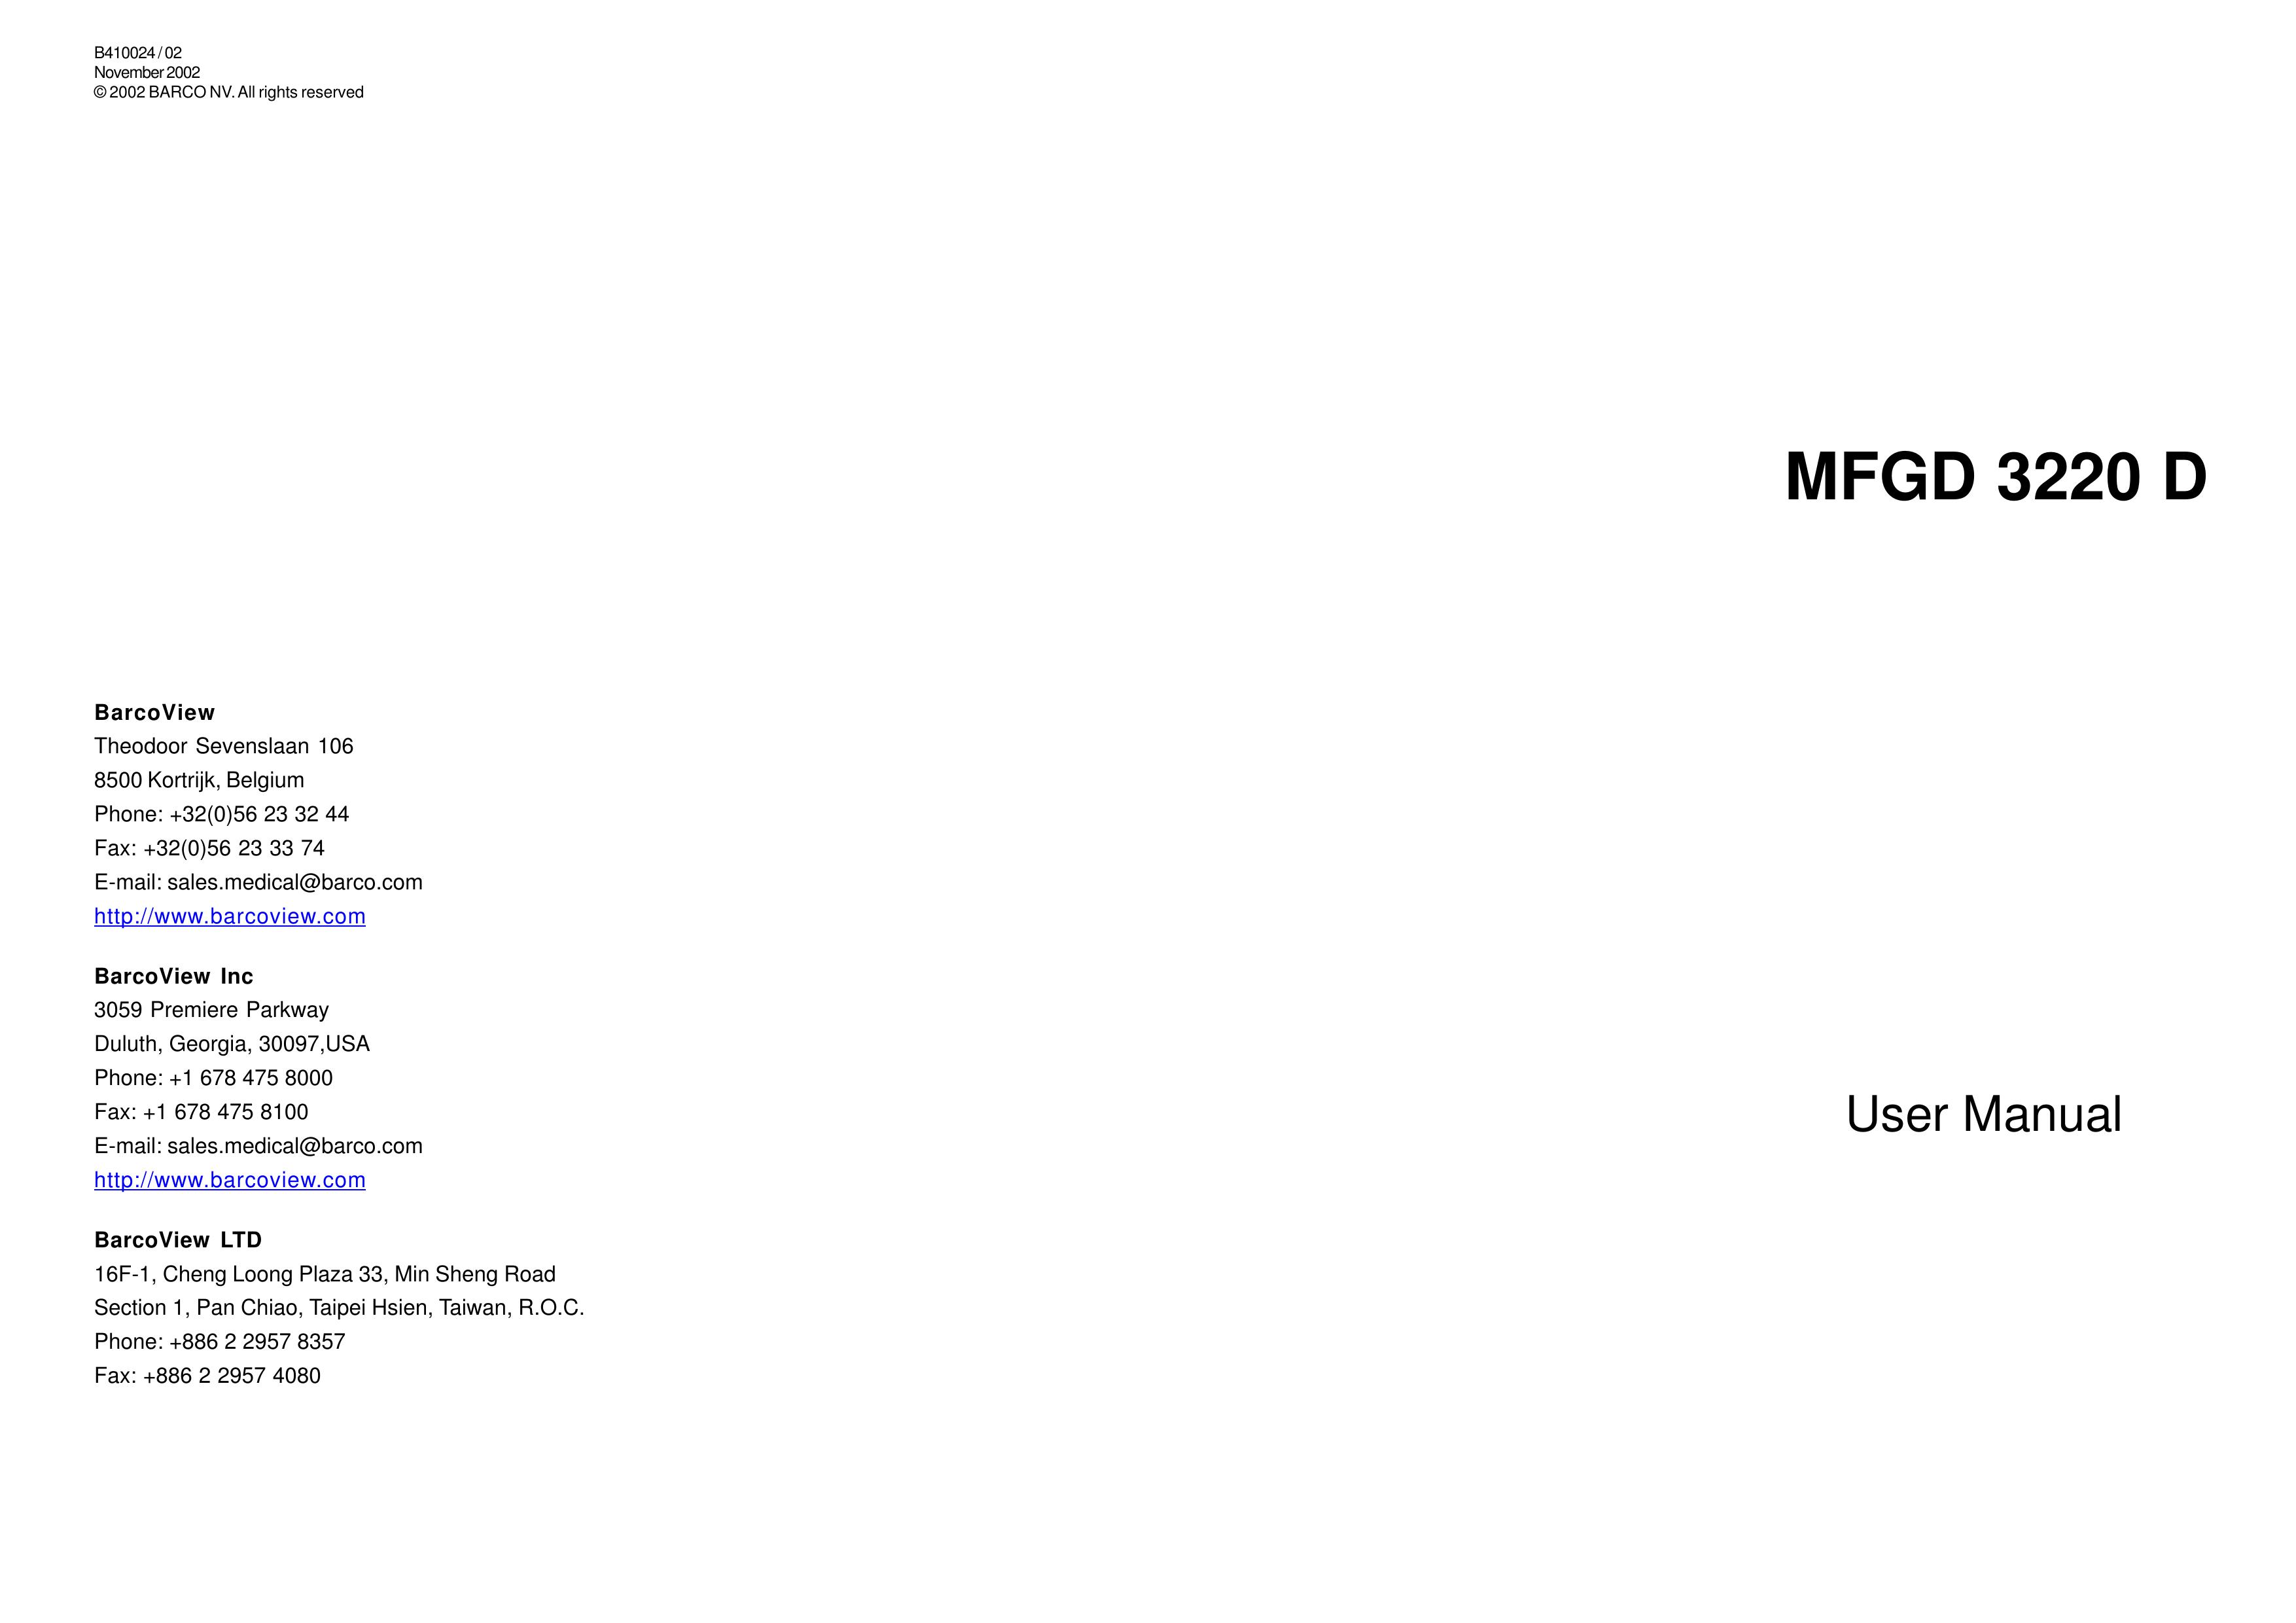 Barco MFGD 3220 D Marine Radio User Manual (Page 1)